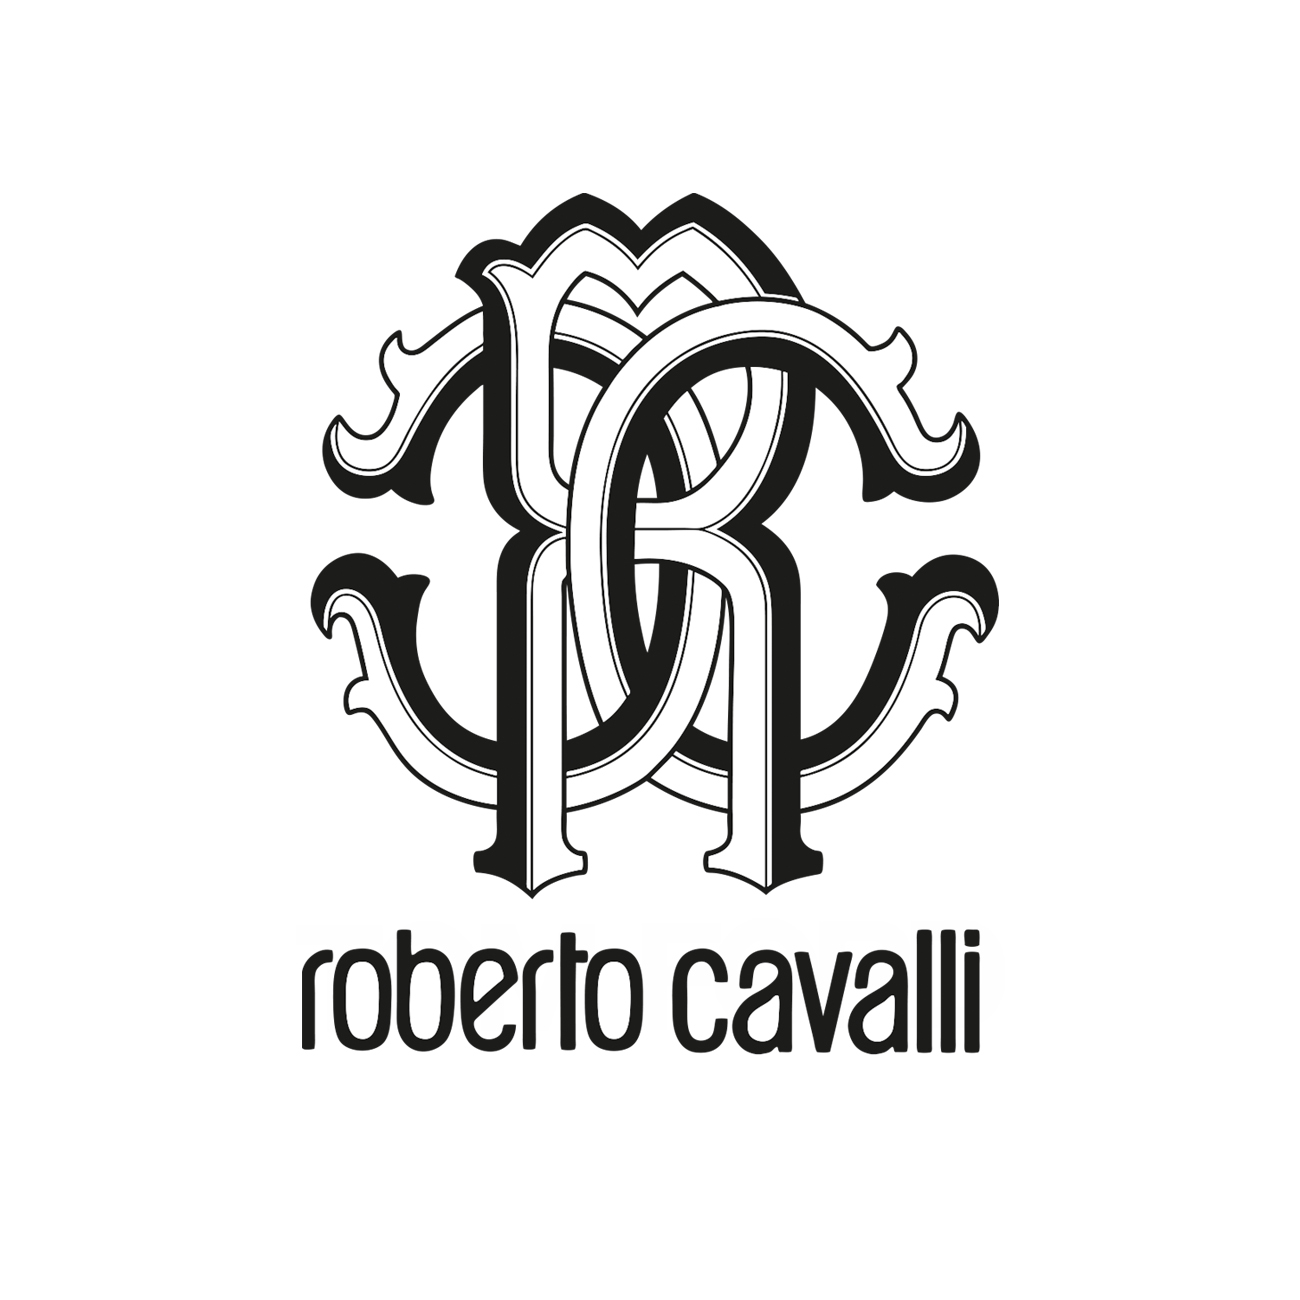 ROBERTO CAVALLI Lady's Short Sleeve Top, Tee Shirt, T-Shirt Size S | eBay